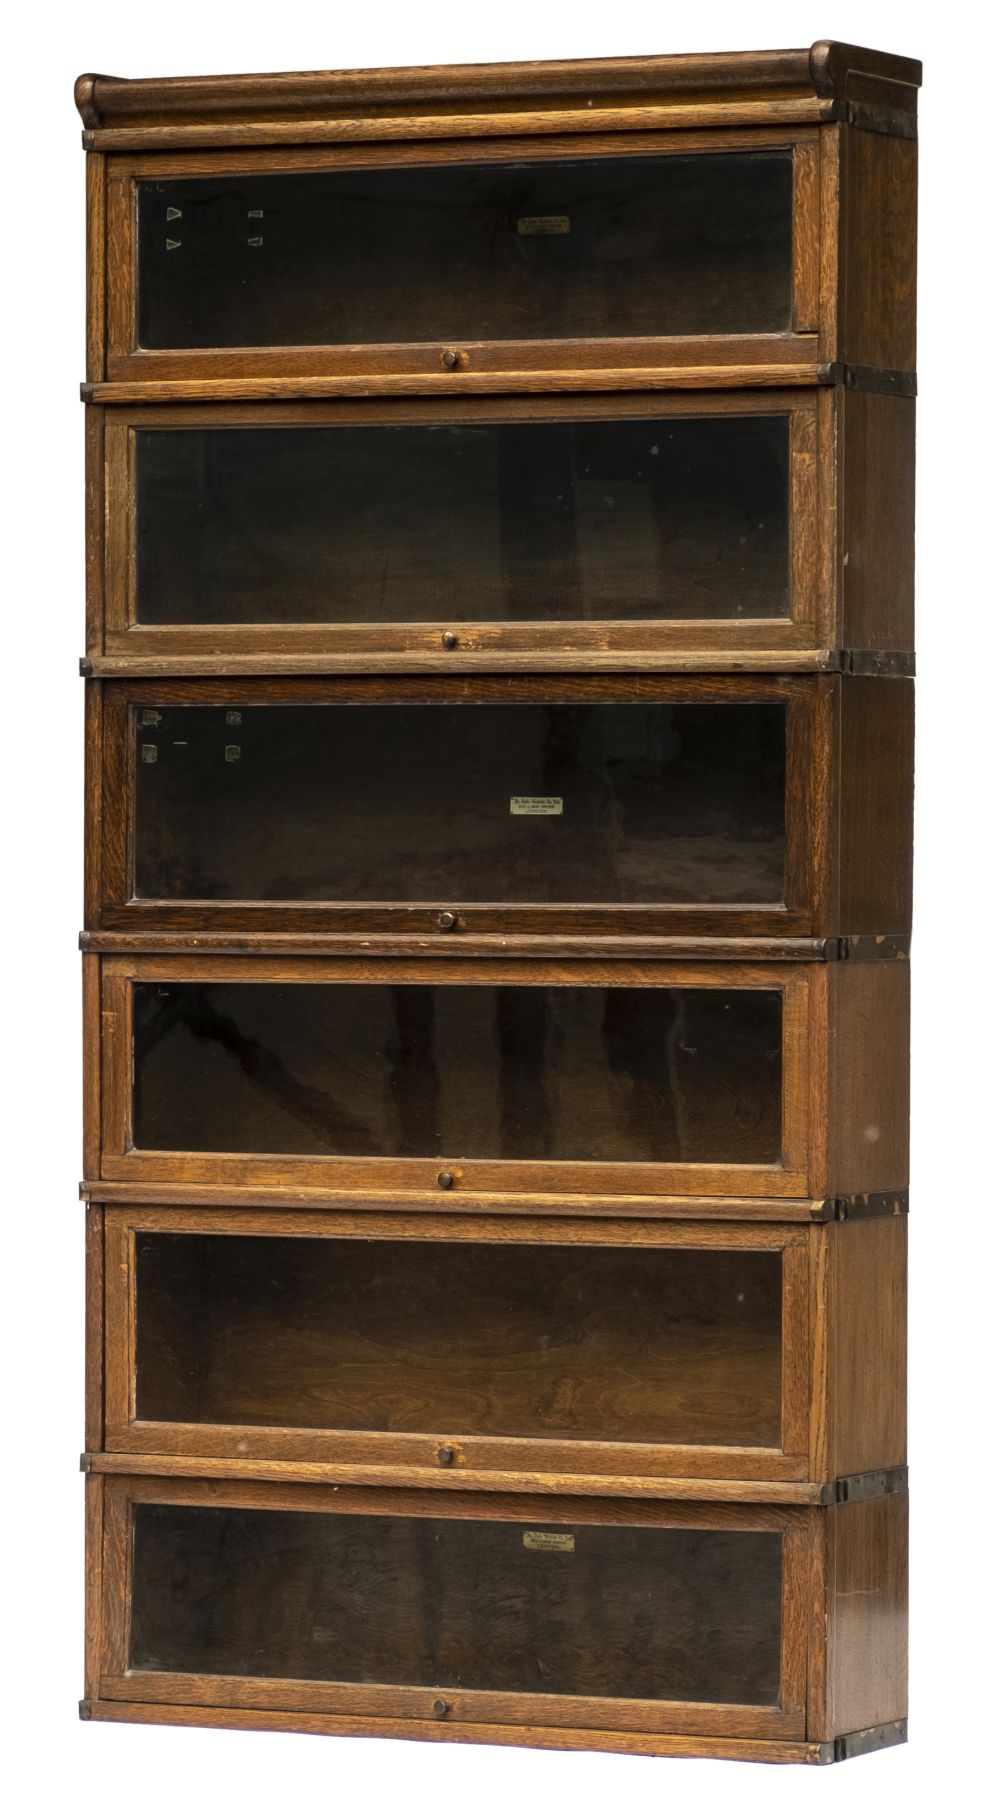 * Bookcase. A 1920s oak Globe Wernicke bookcase